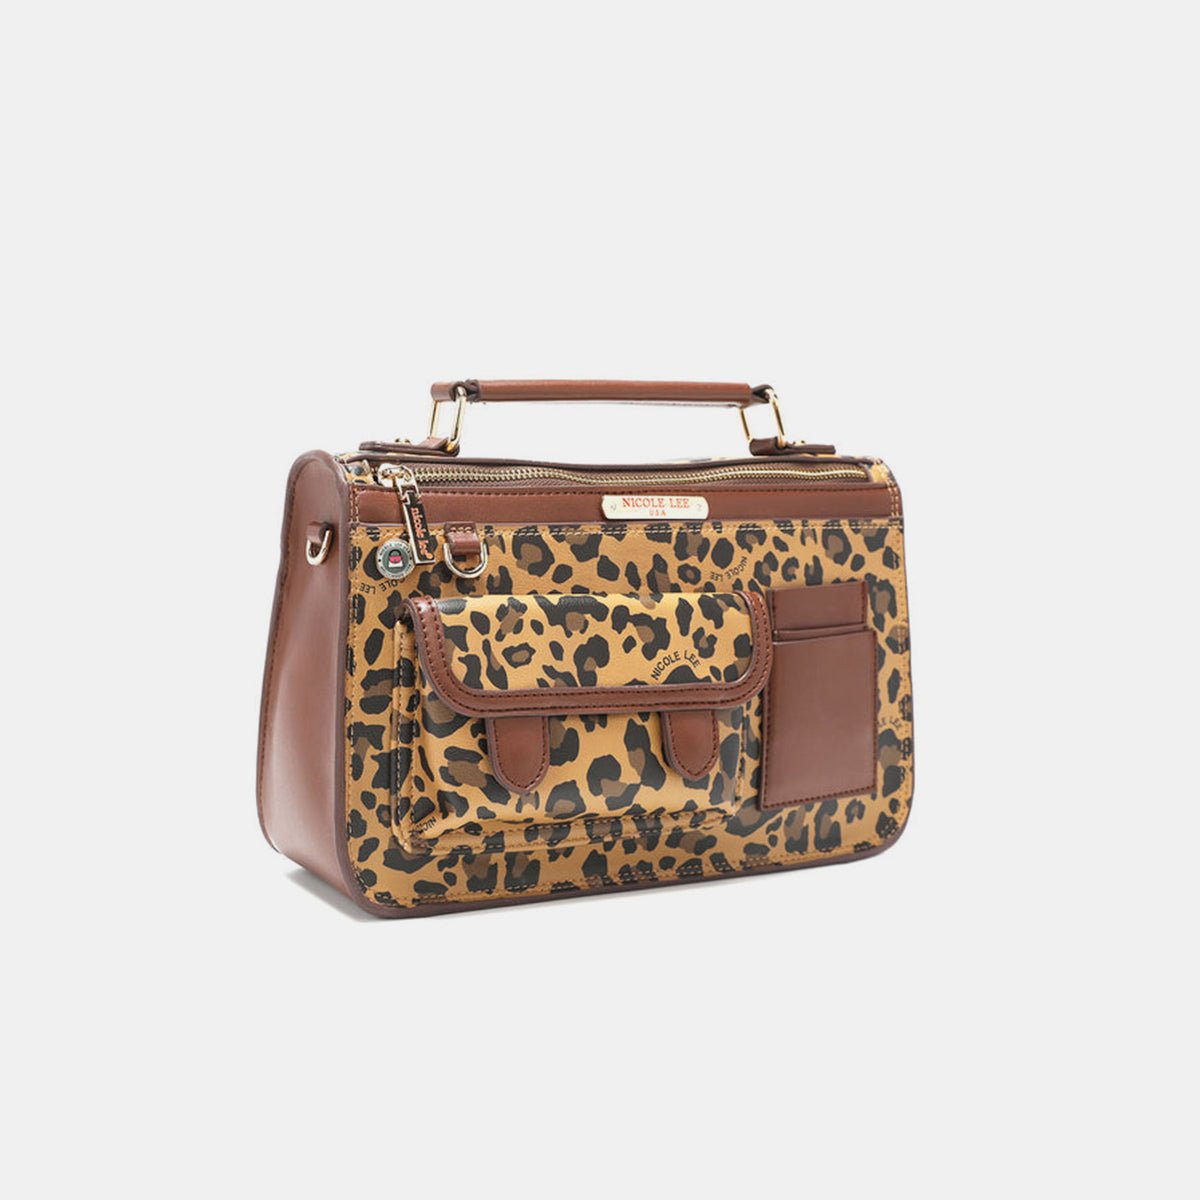 Nicole Lee USA Leopard Top Handle Handbag - Happily Ever Atchison Shop Co.